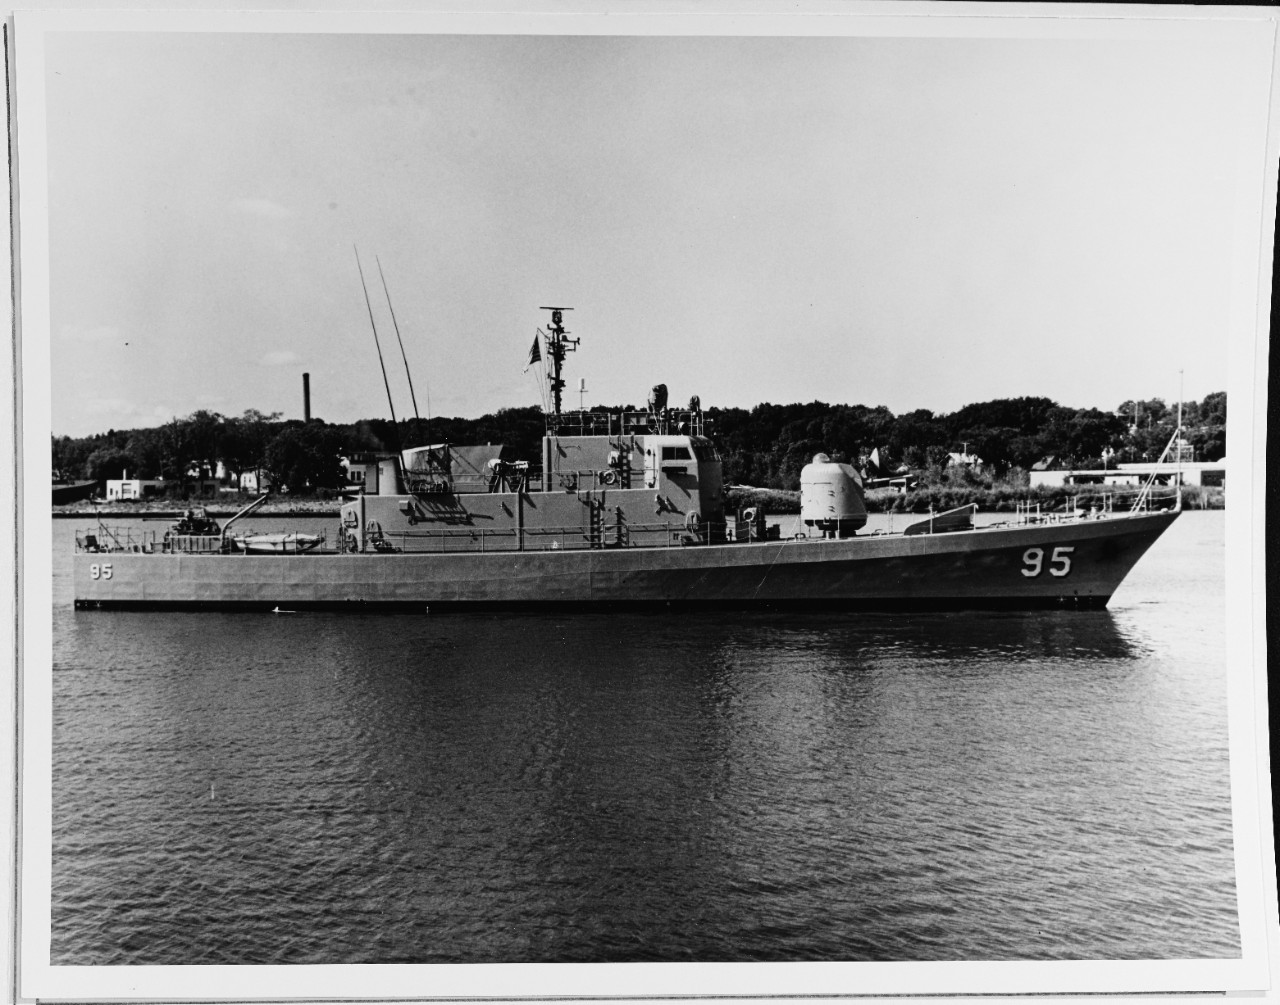 USS PG-95 DEFIANCE